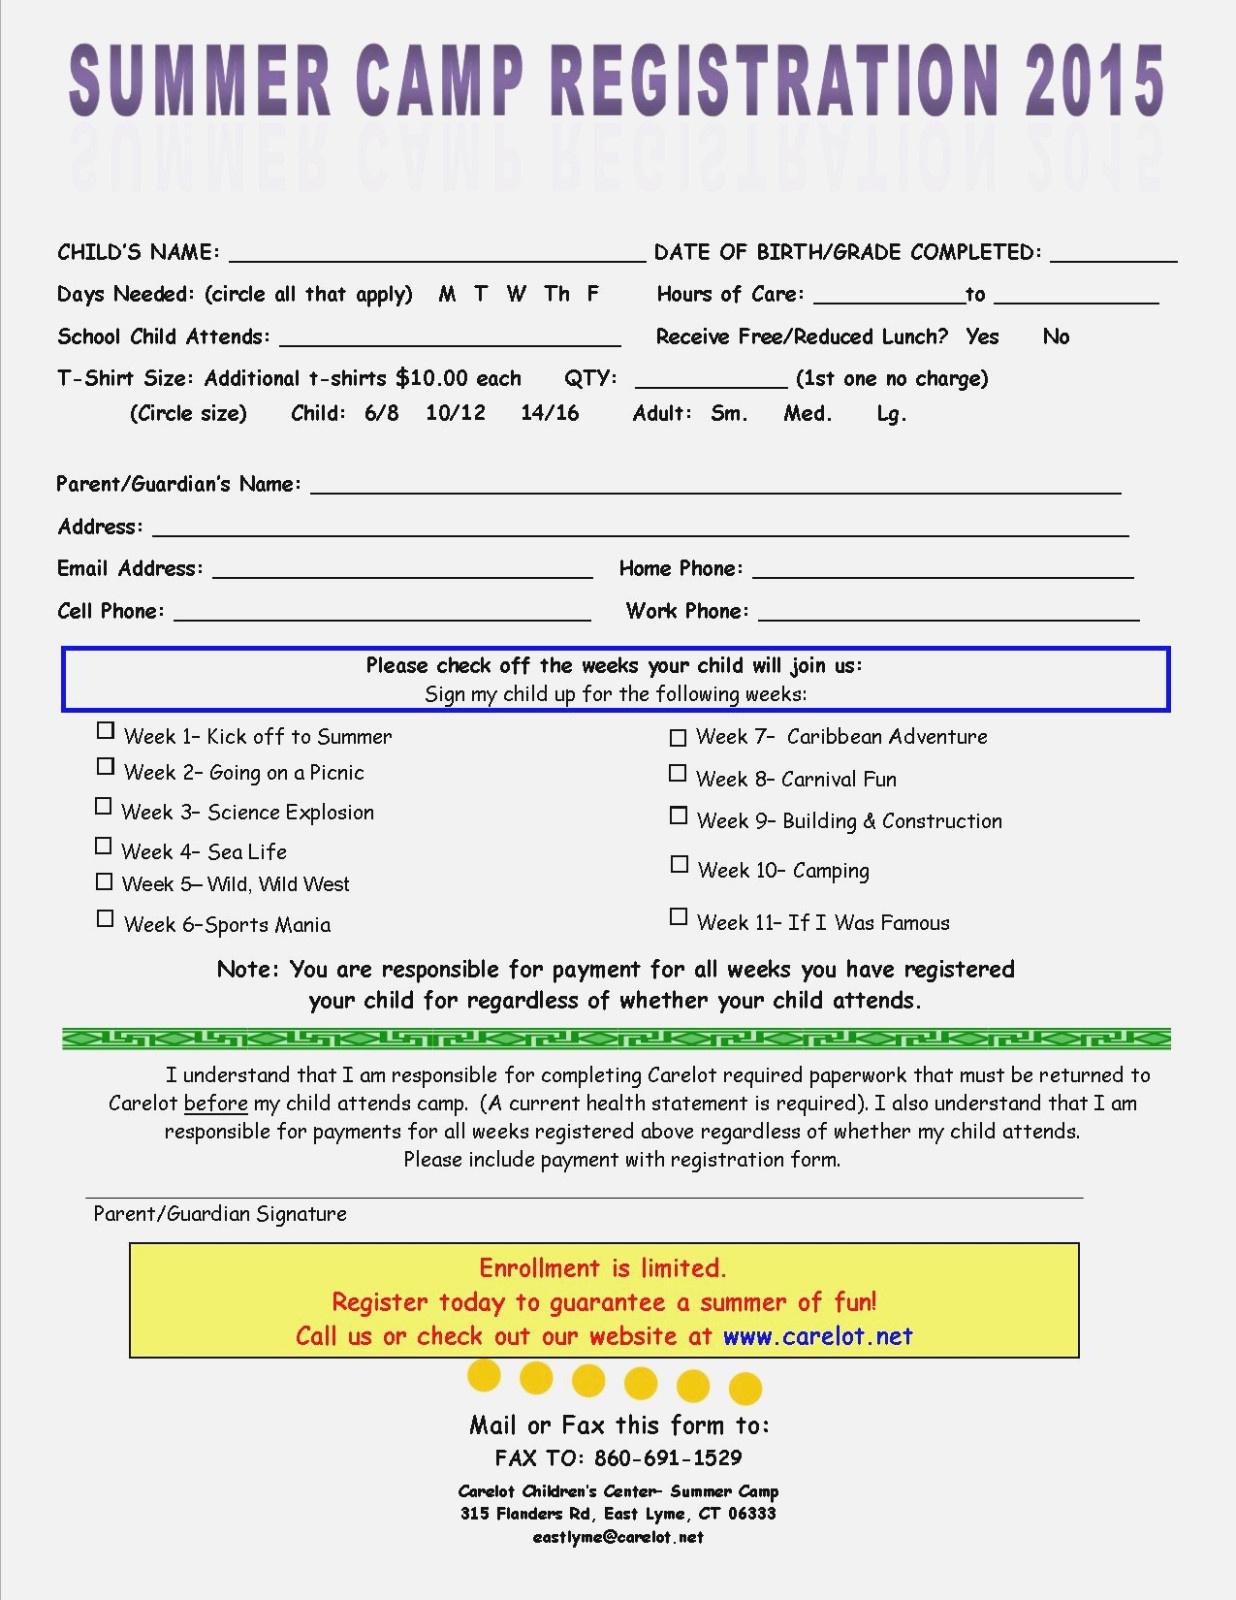 Summer Camp Application Form Sample | Leancy Travel - Free Printable Summer Camp Registration Forms